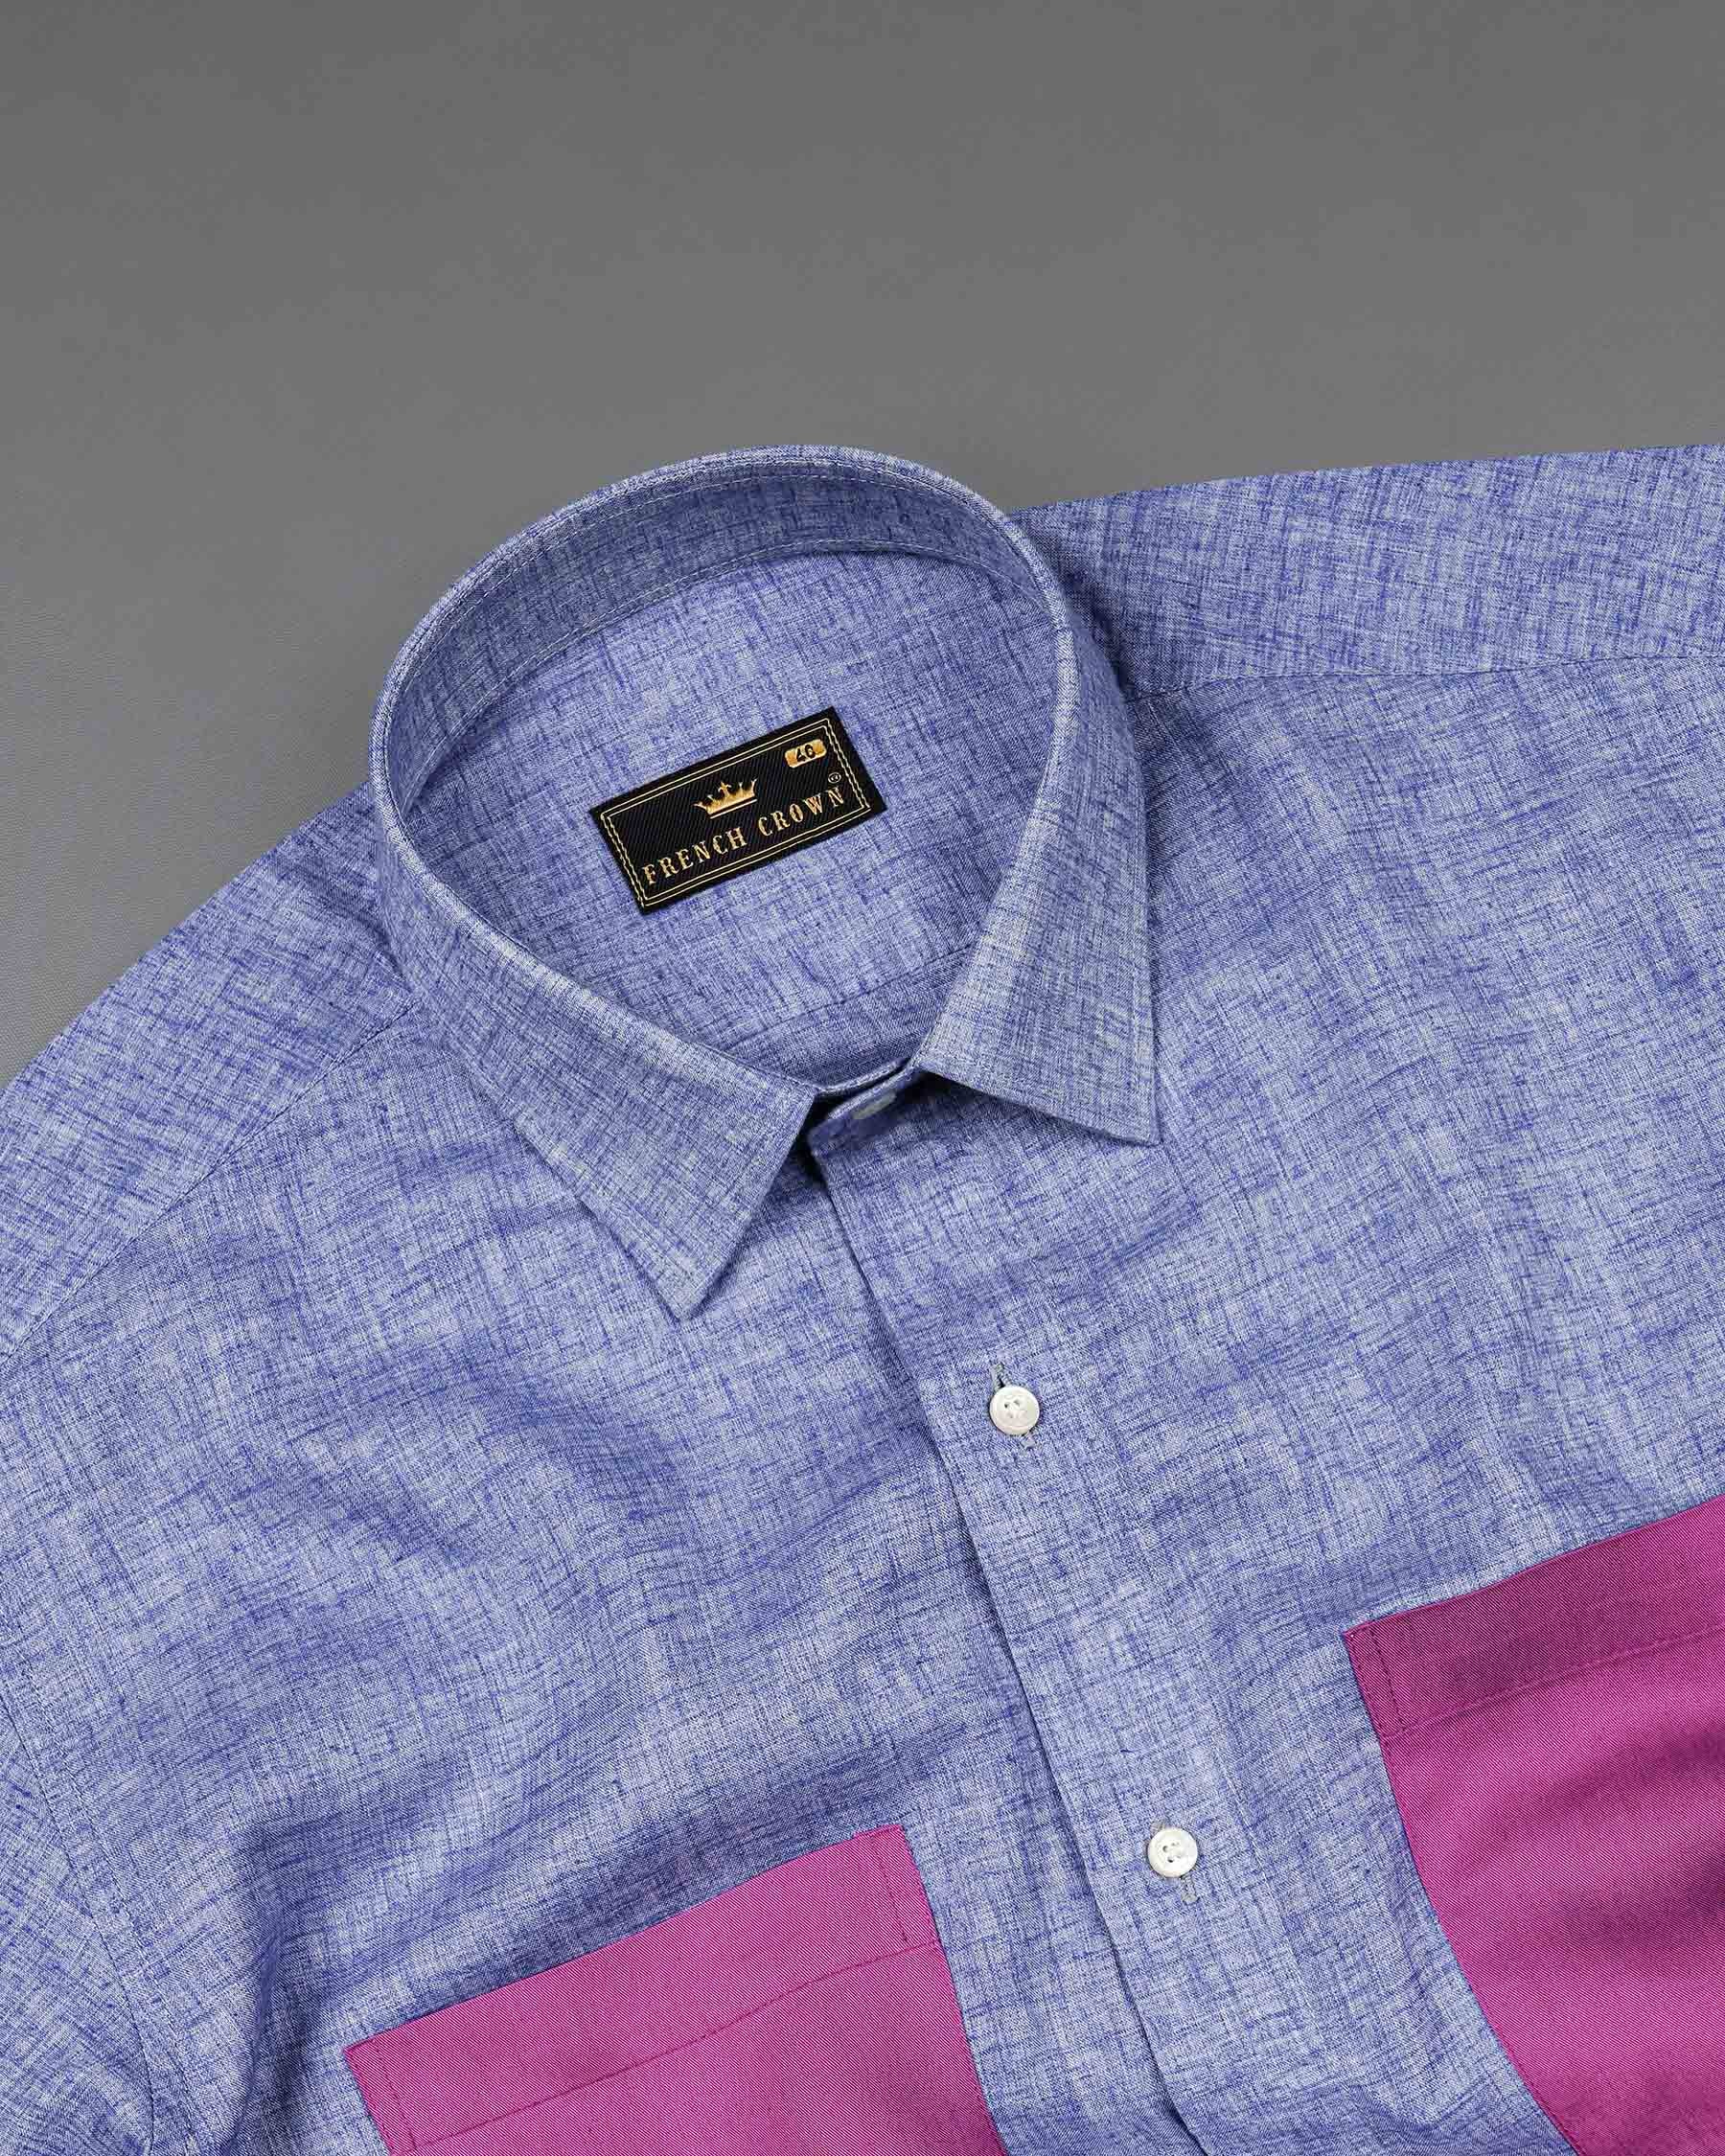 Chetwode Blue With Purple Two Side Pocket Chambray Premium Cotton Designer Shirt 7946-P196-38,7946-P196-H-38,7946-P196-39,7946-P196-H-39,7946-P196-40,7946-P196-H-40,7946-P196-42,7946-P196-H-42,7946-P196-44,7946-P196-H-44,7946-P196-46,7946-P196-H-46,7946-P196-48,7946-P196-H-48,7946-P196-50,7946-P196-H-50,7946-P196-52,7946-P196-H-52